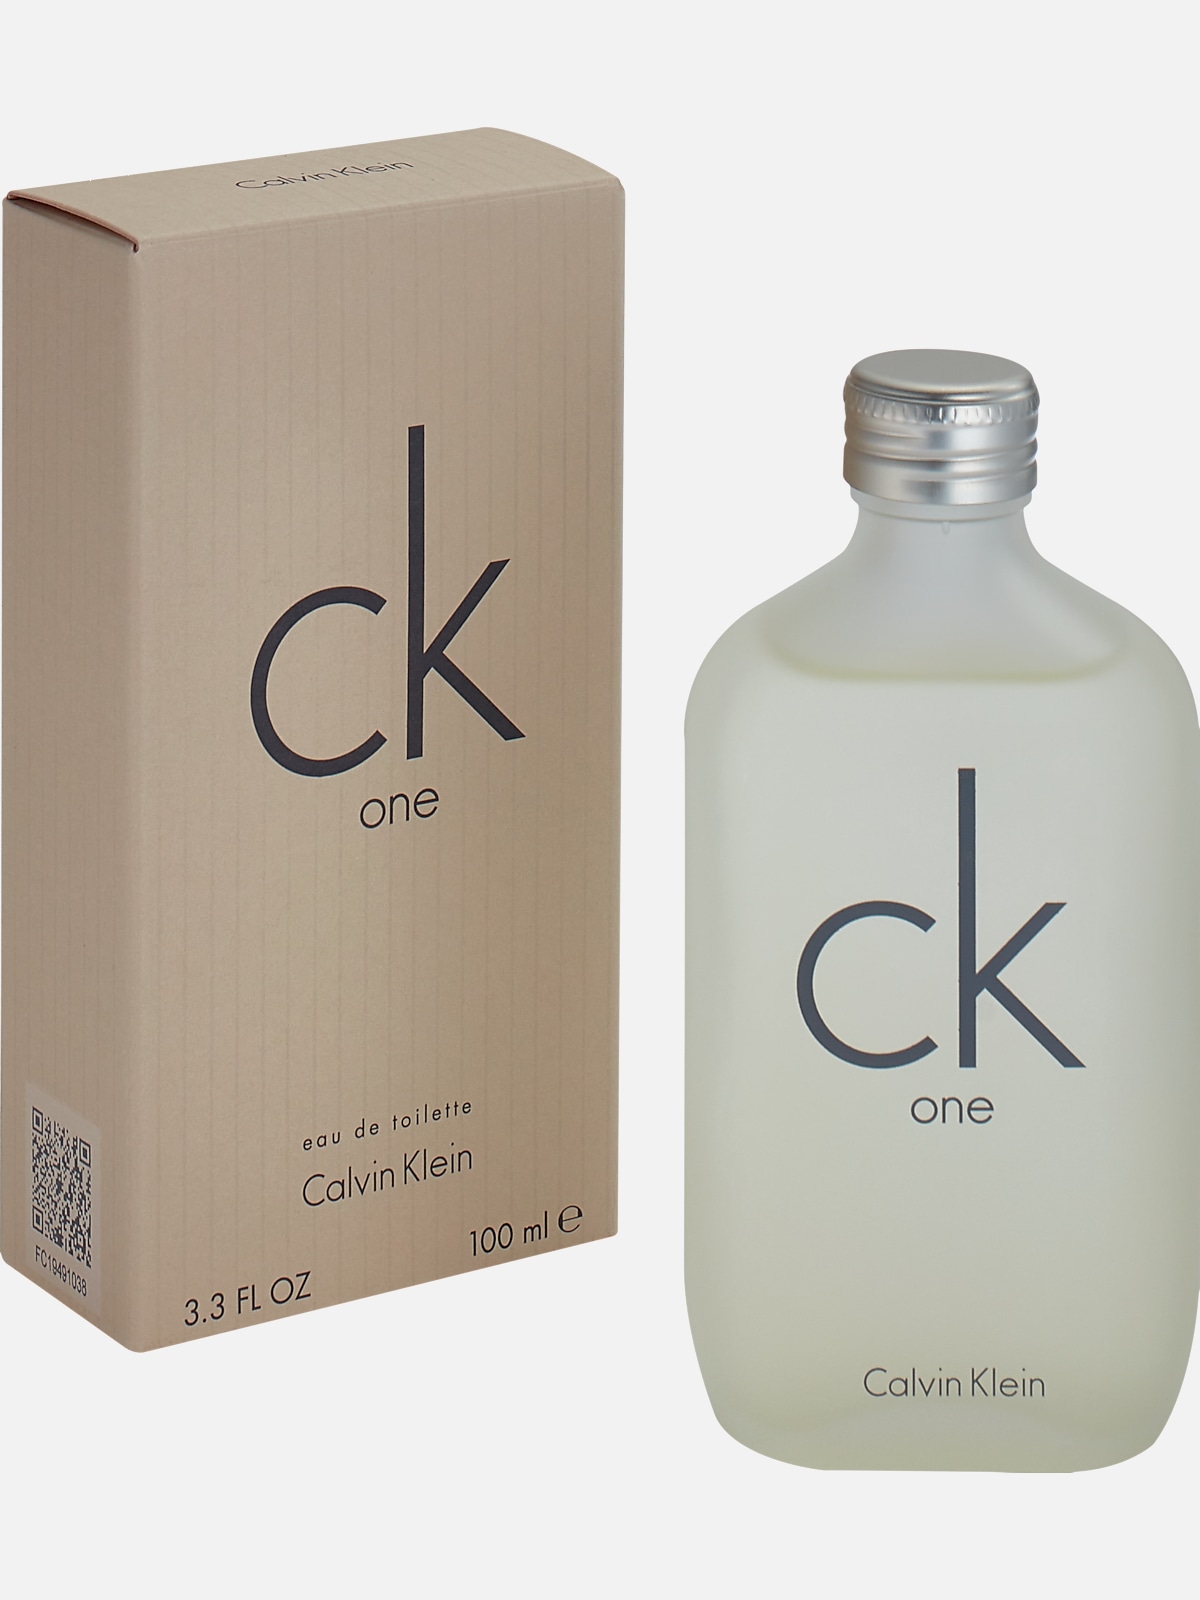 Calvin Klein One Eau de Toilette3.4 oz. | Gifts| Men's Wearhouse